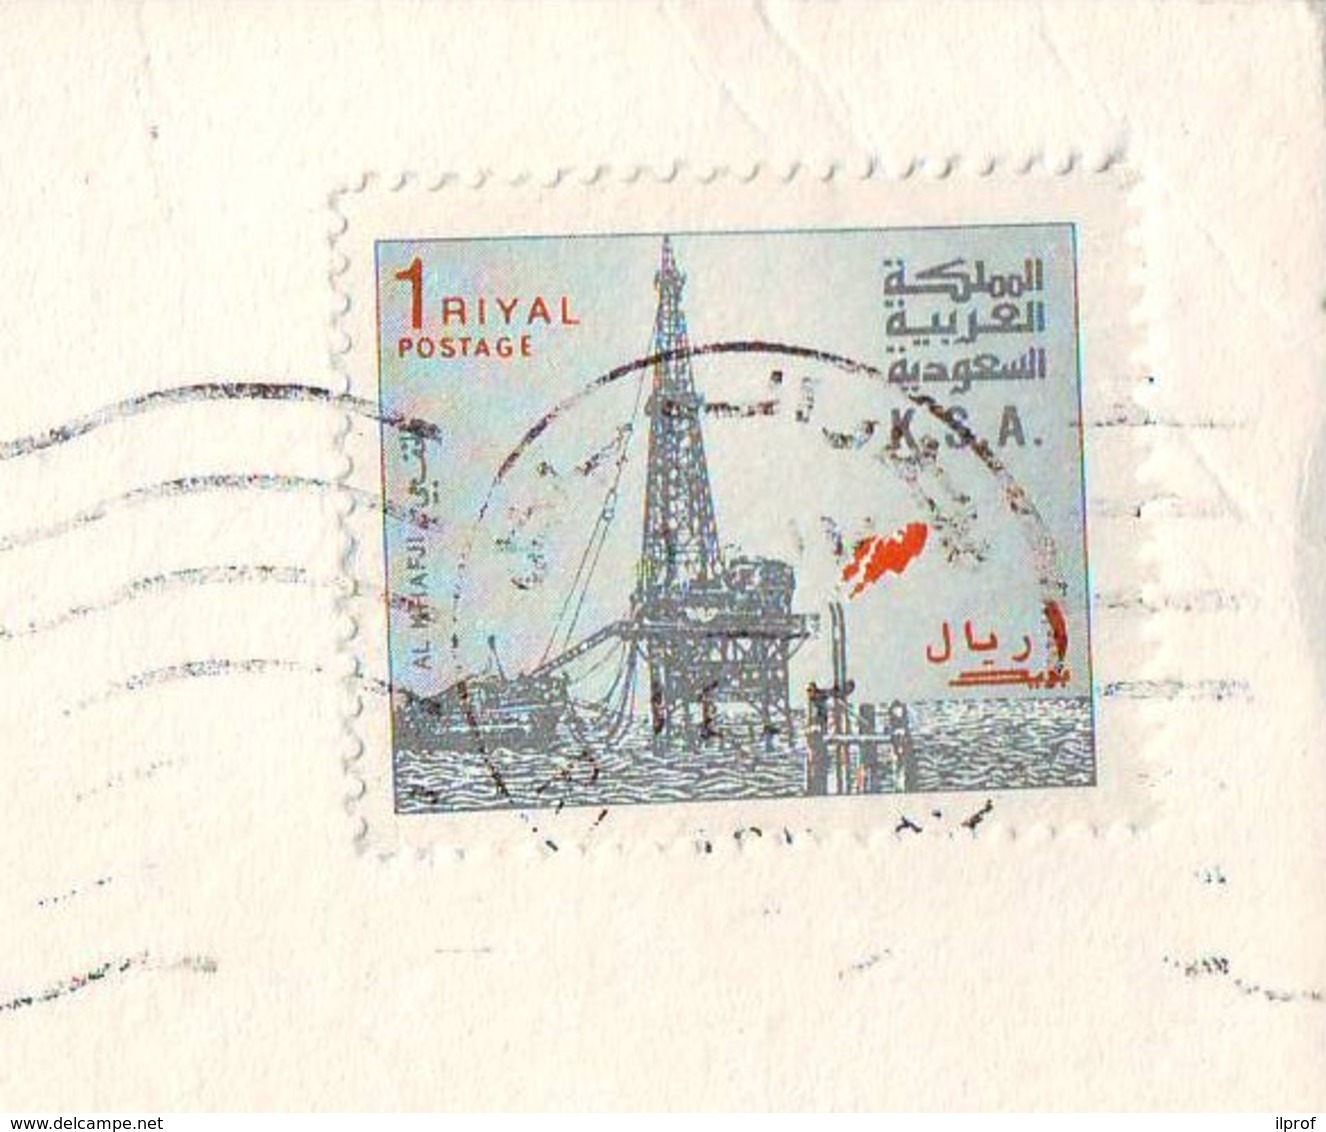 Oil Plant Stamp Val. 1 R.1982/83 Saudi Arabia On Postcard (a) - Arabia Saudita